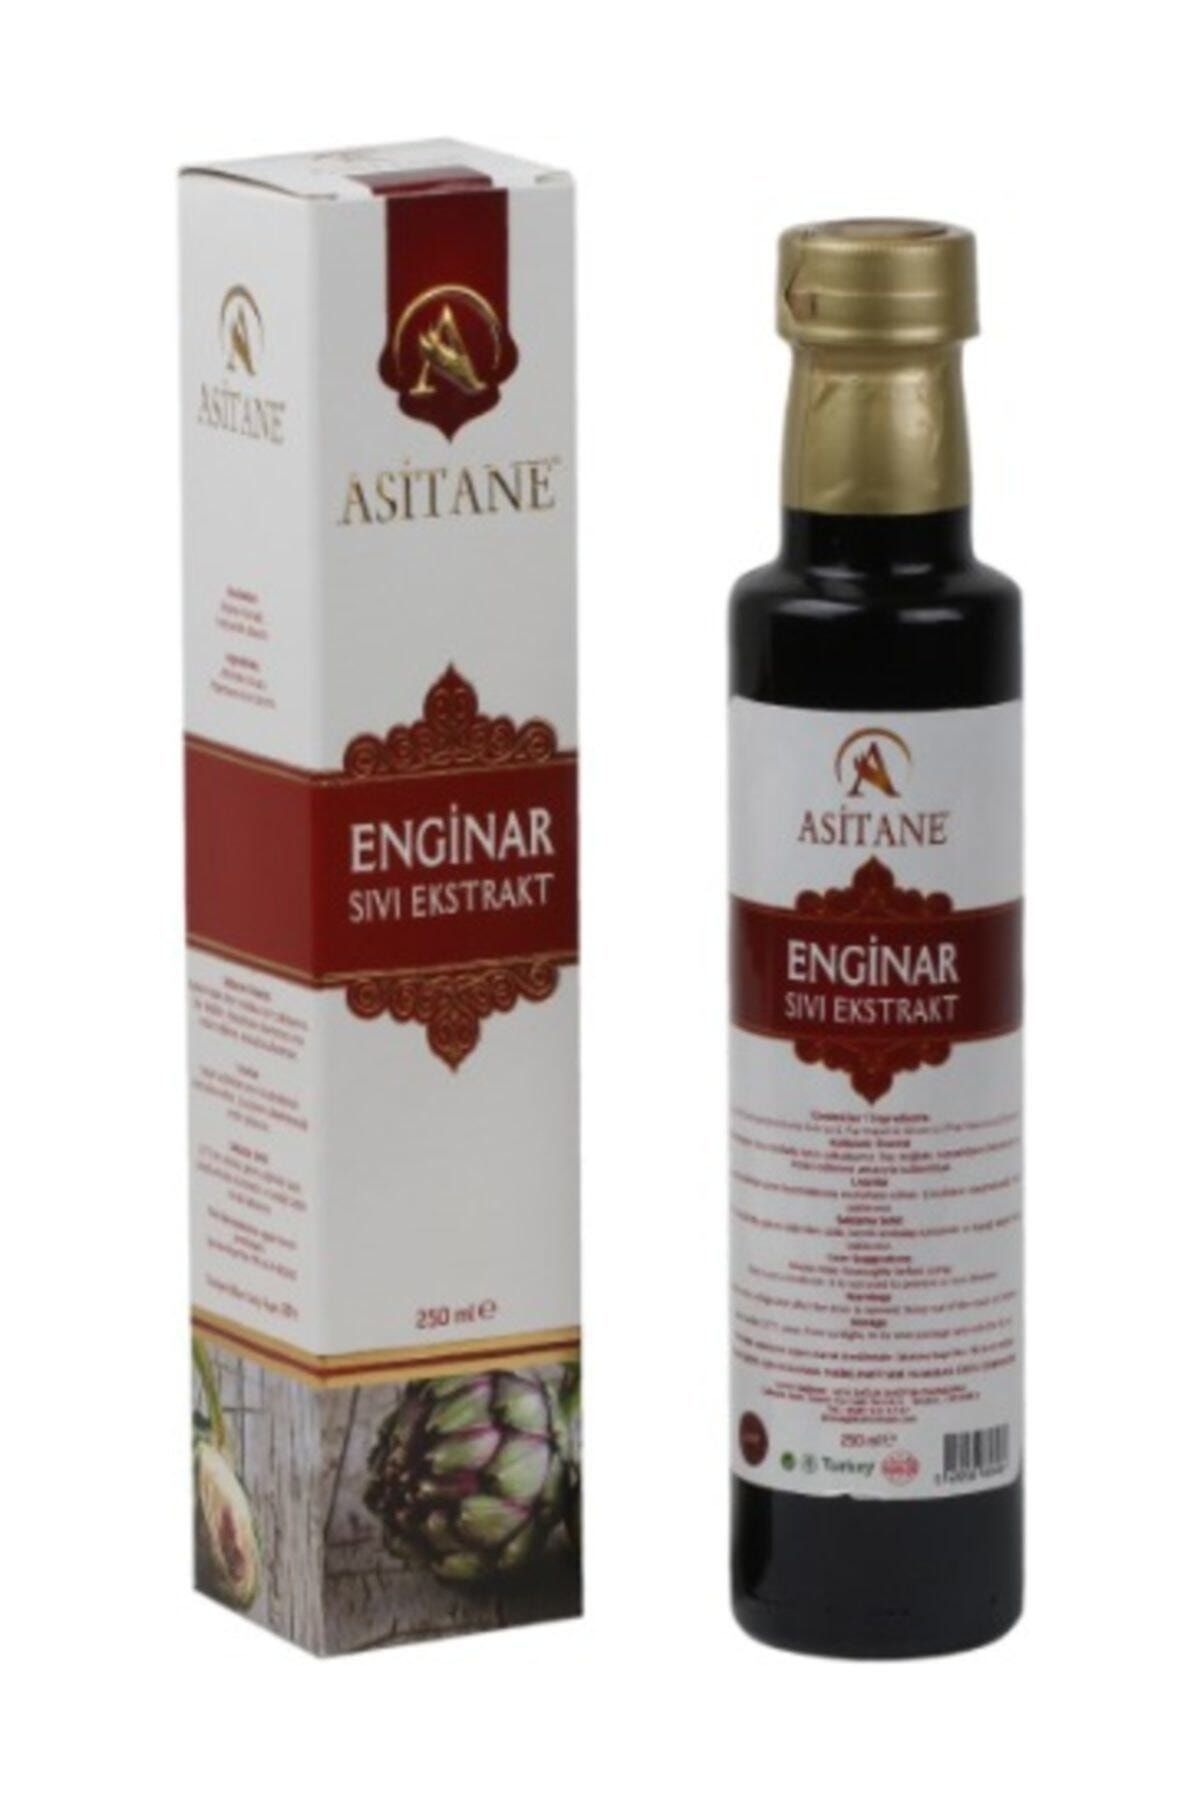 Asitane Enginar Sıvı Ekstrakt 250 ml